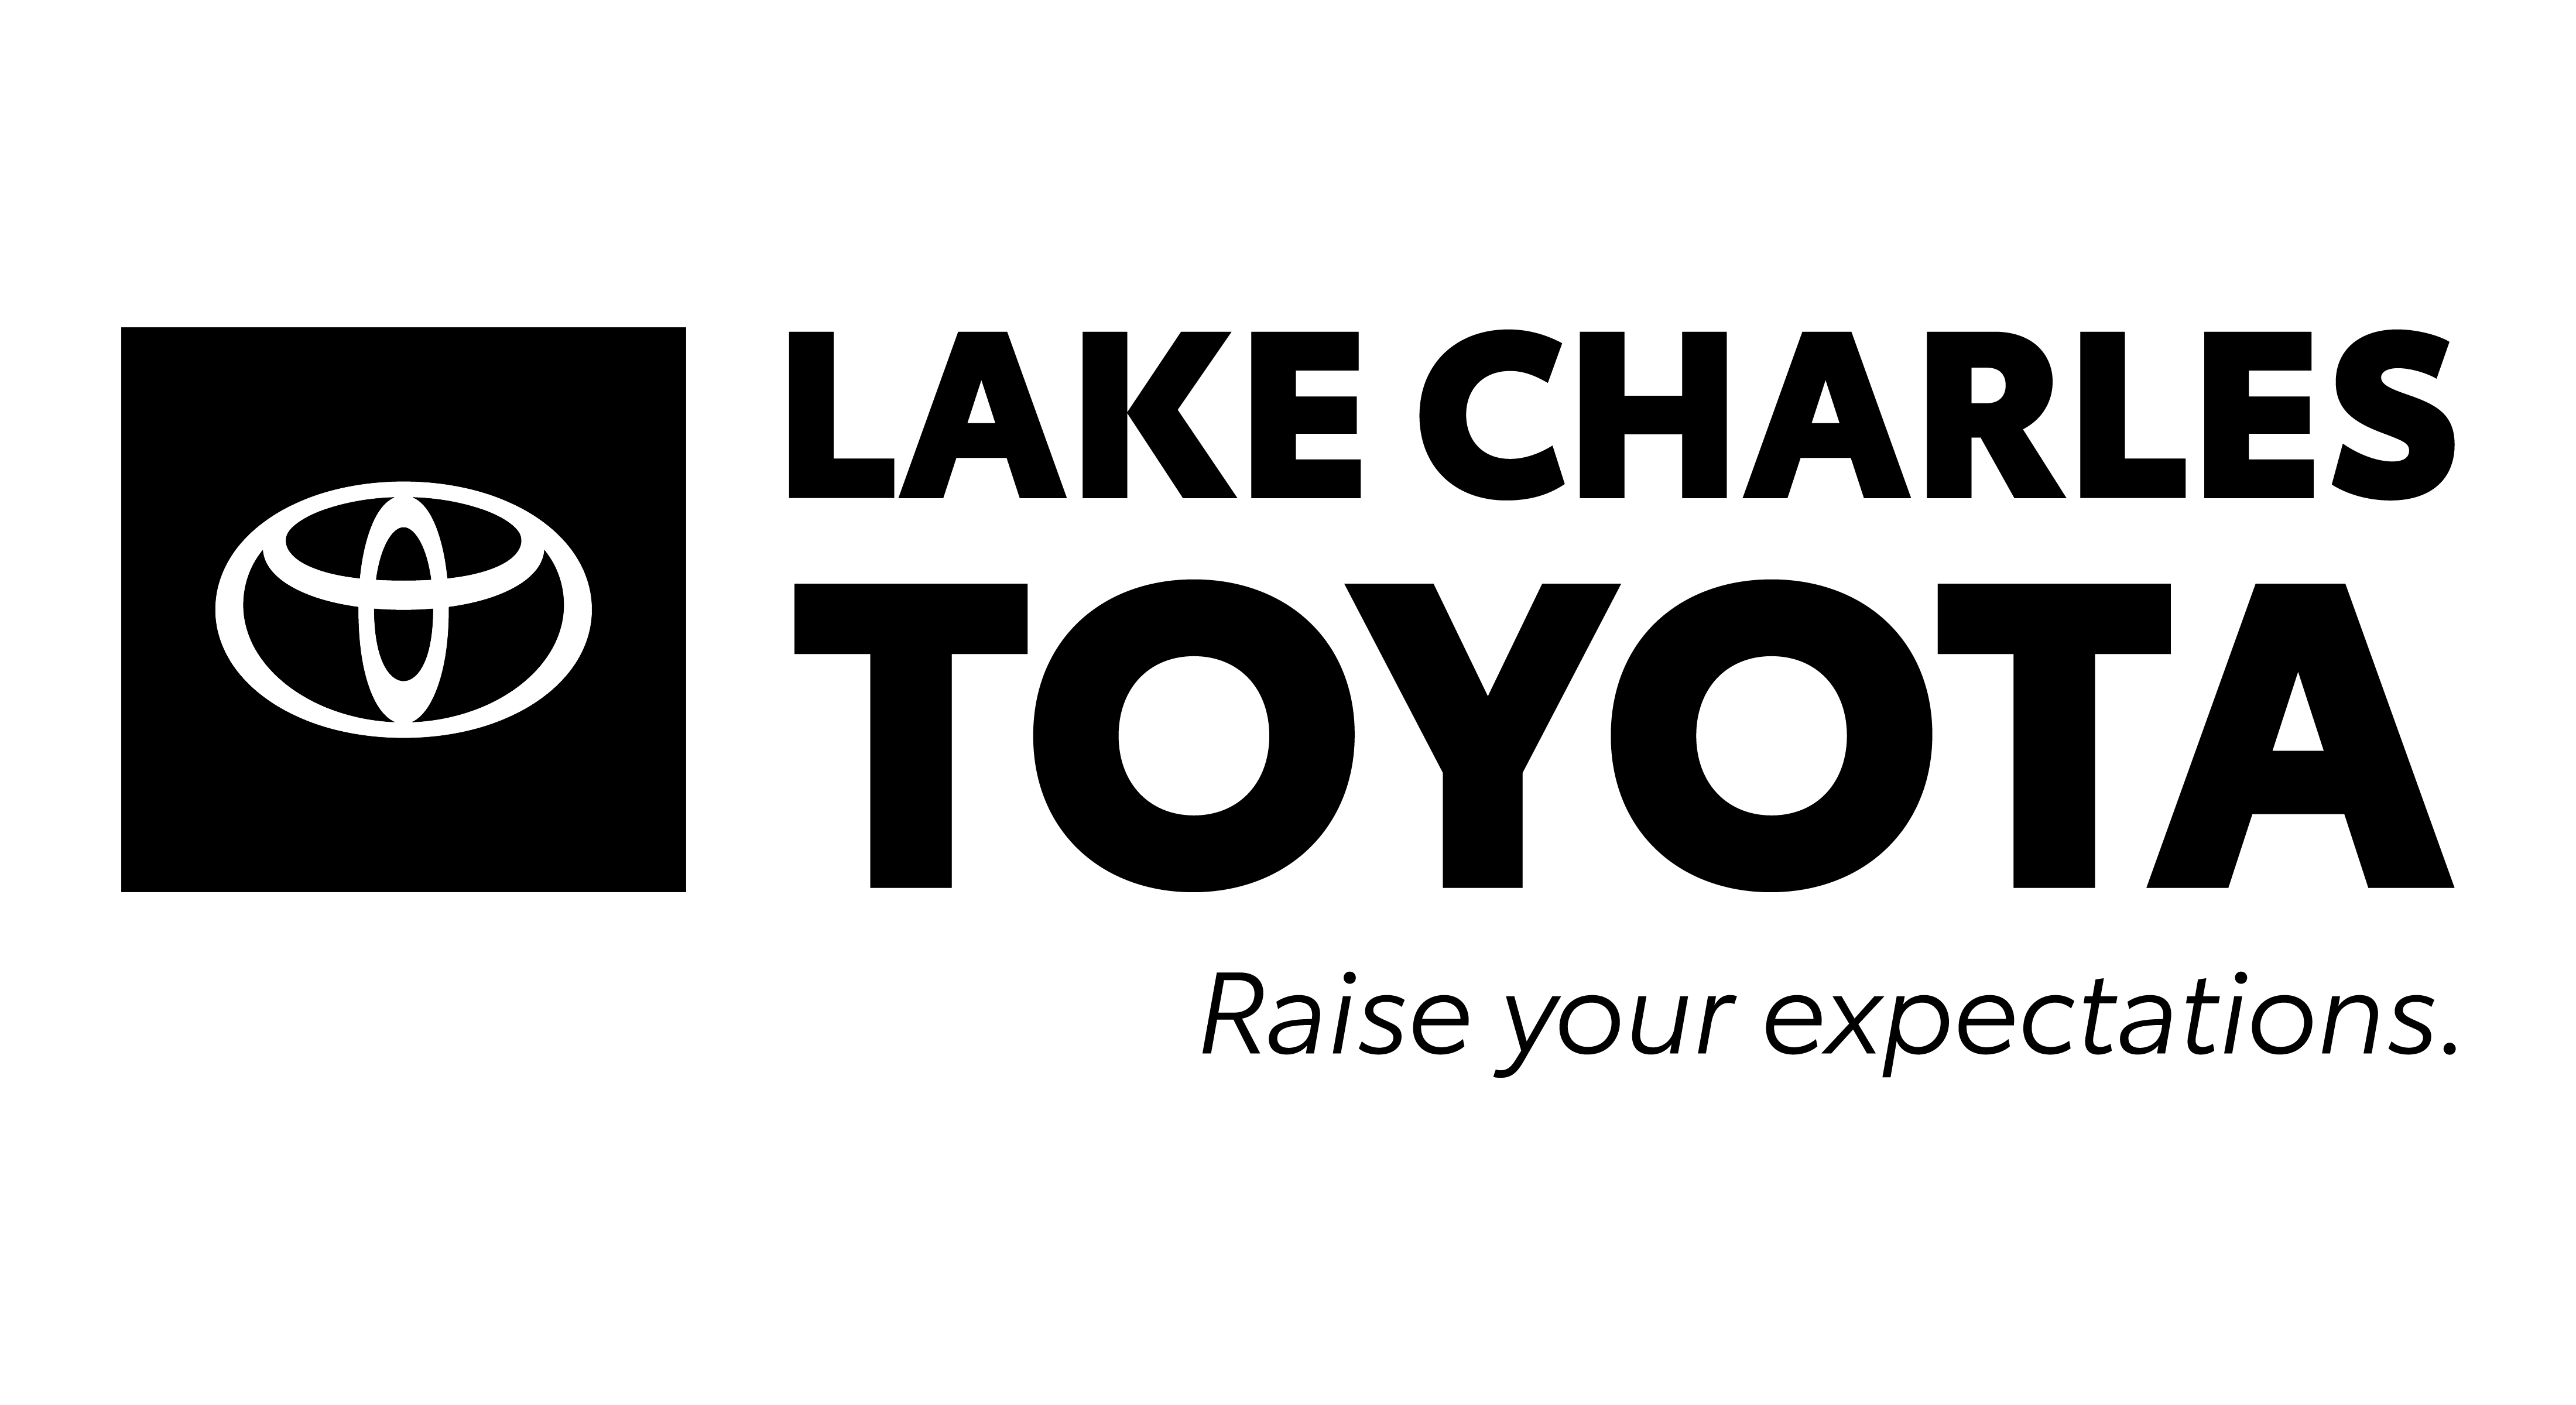 Lake Charles Toyota Logo in all black